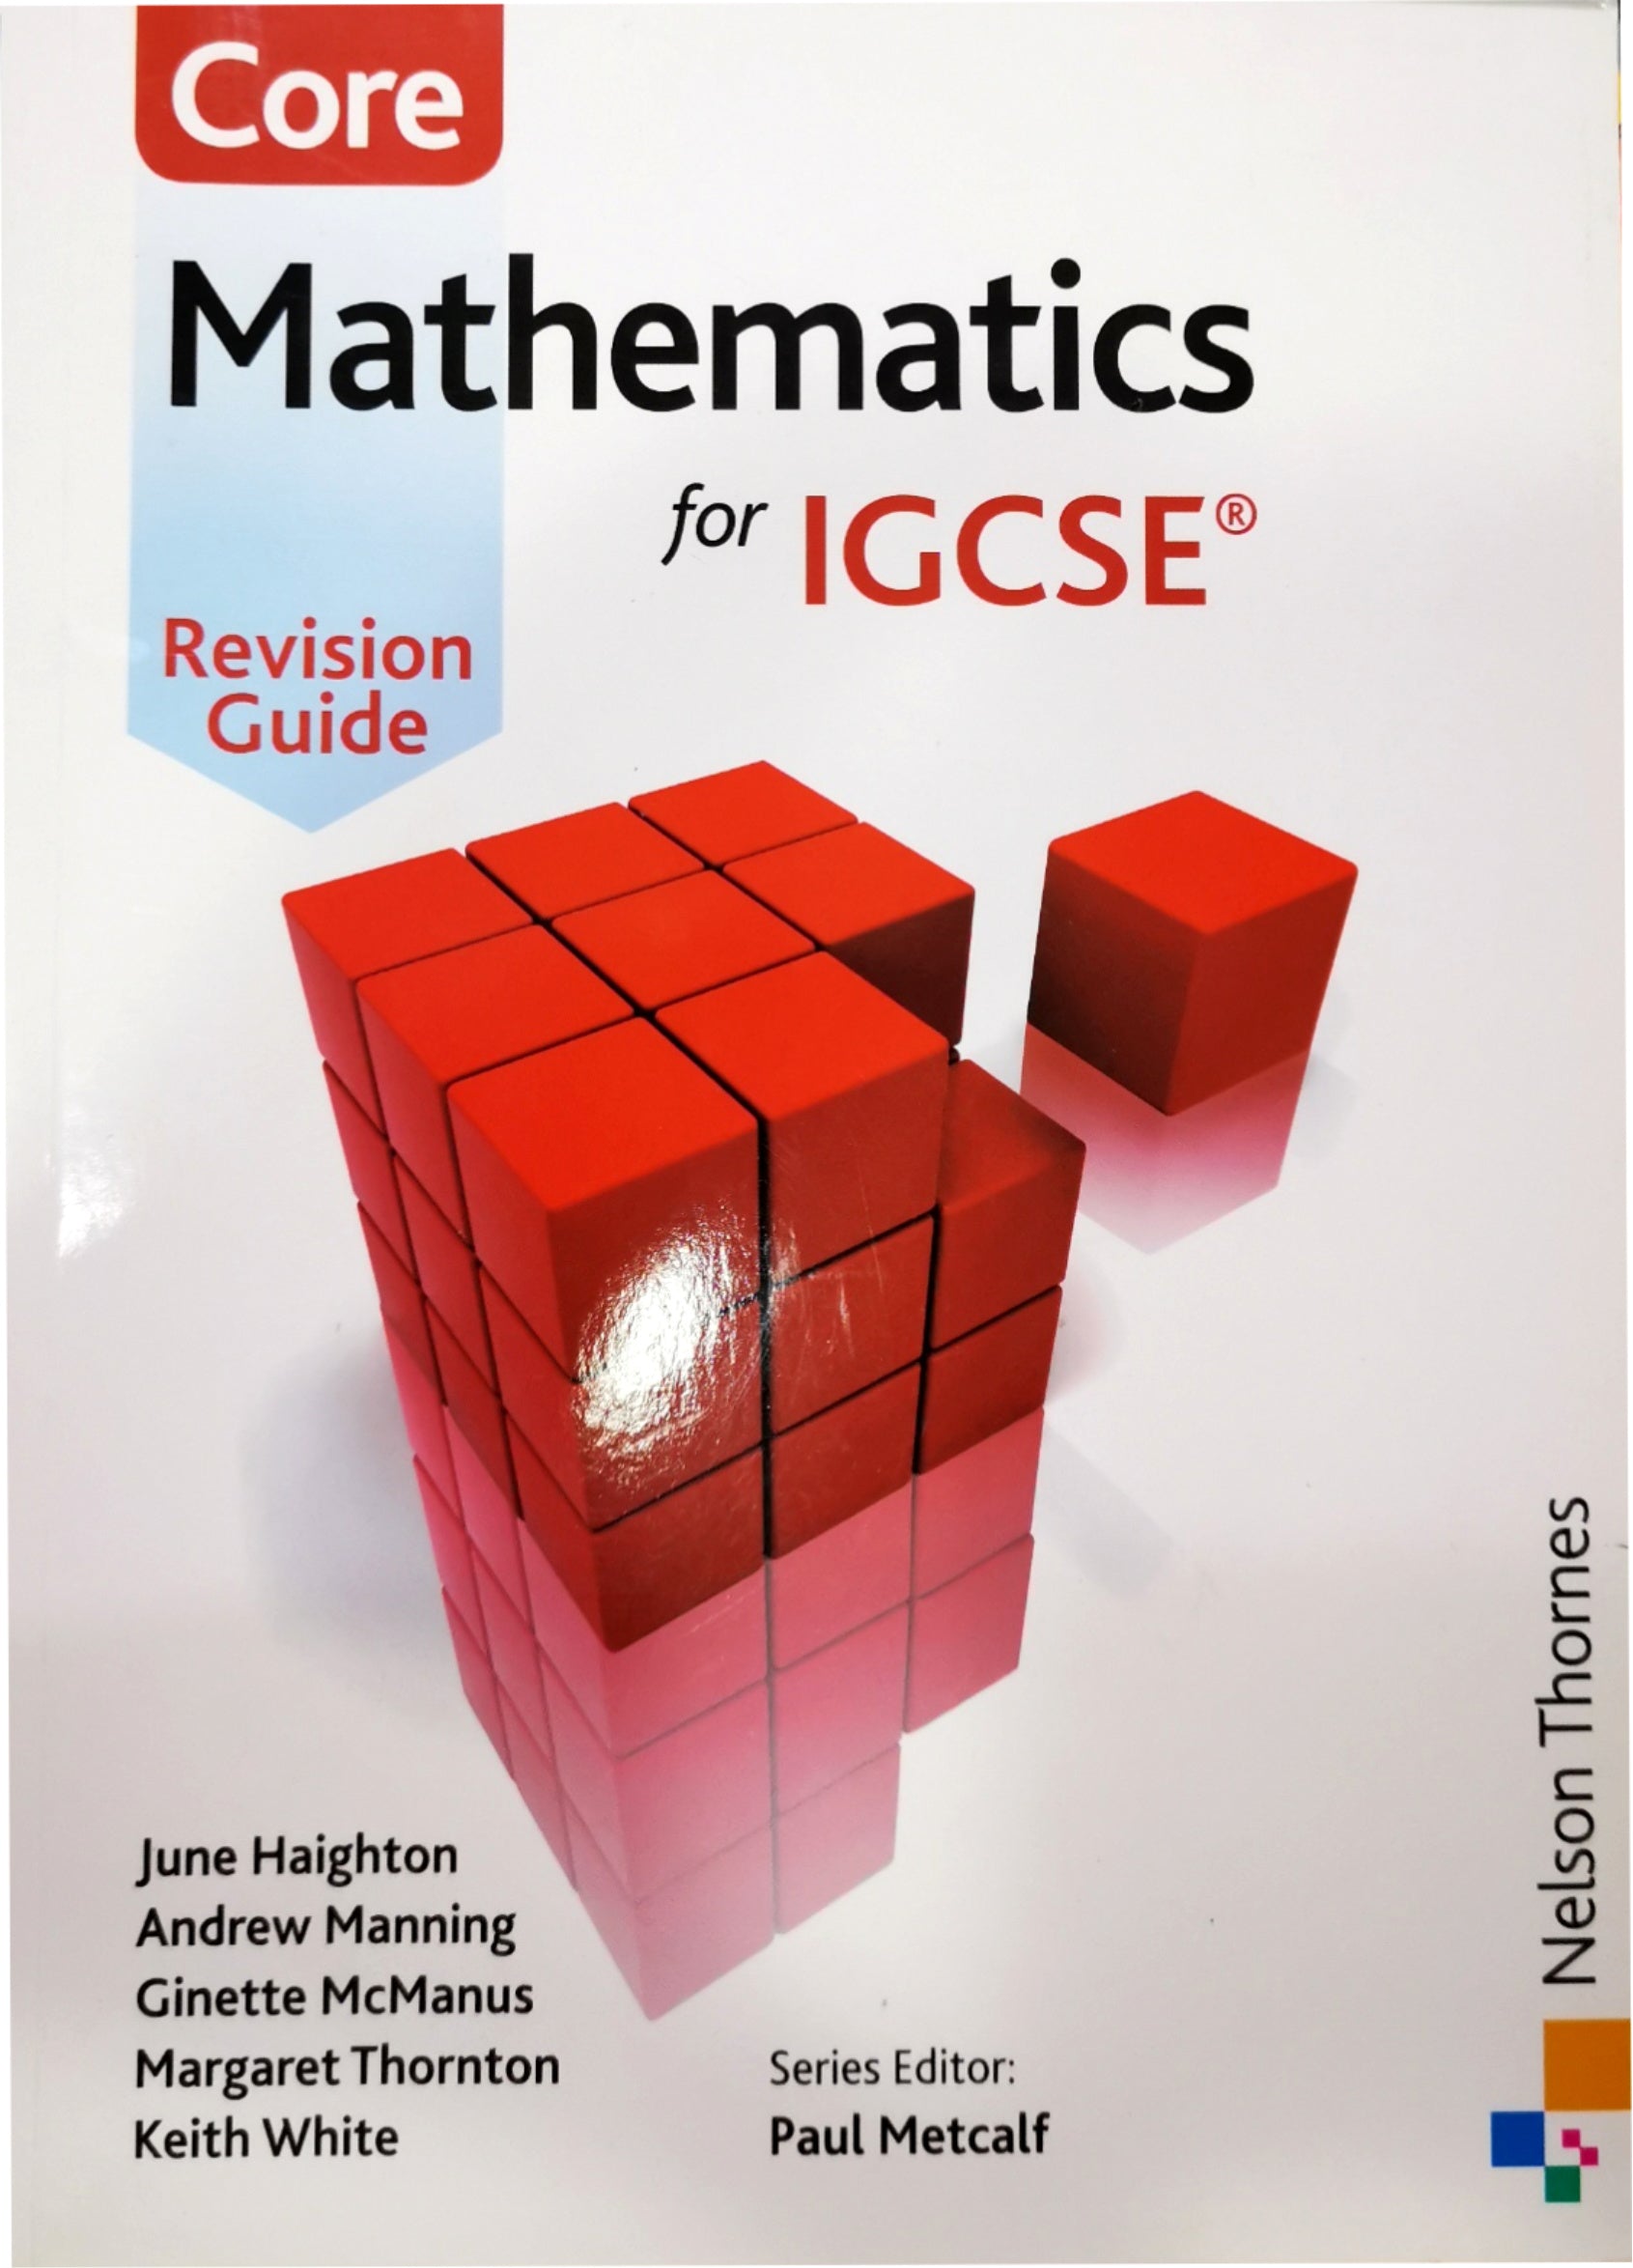 Core Mathematics for IGCSE- Revision Guide